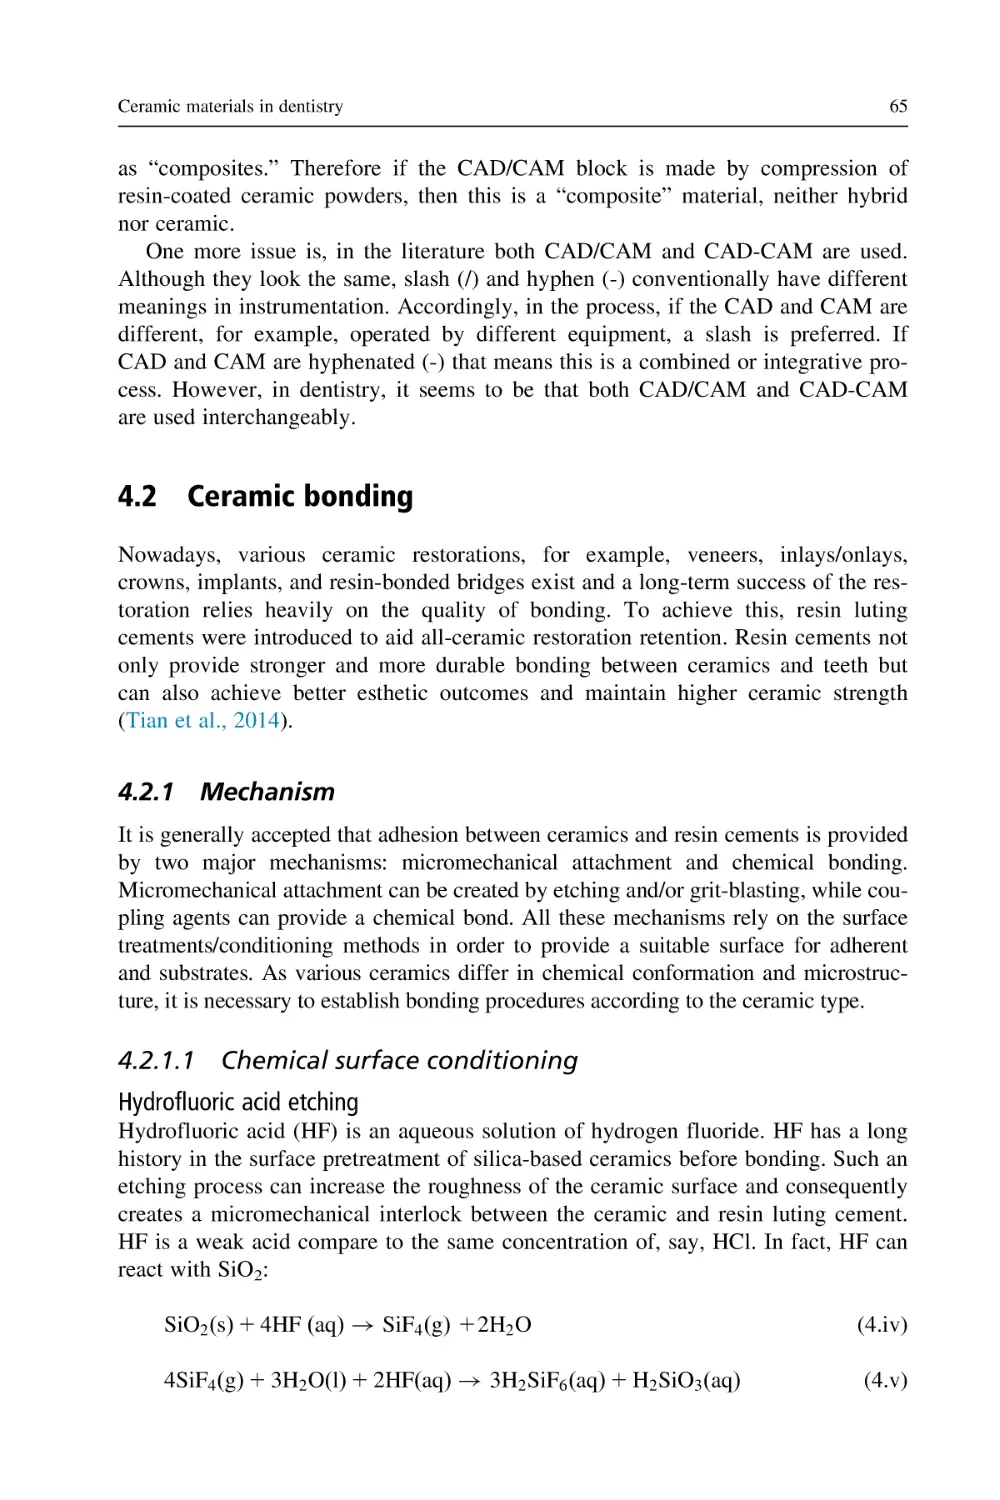 4.2 Ceramic bonding
4.2.1 Mechanism
4.2.1.1 Chemical surface conditioning
Hydrofluoric acid etching